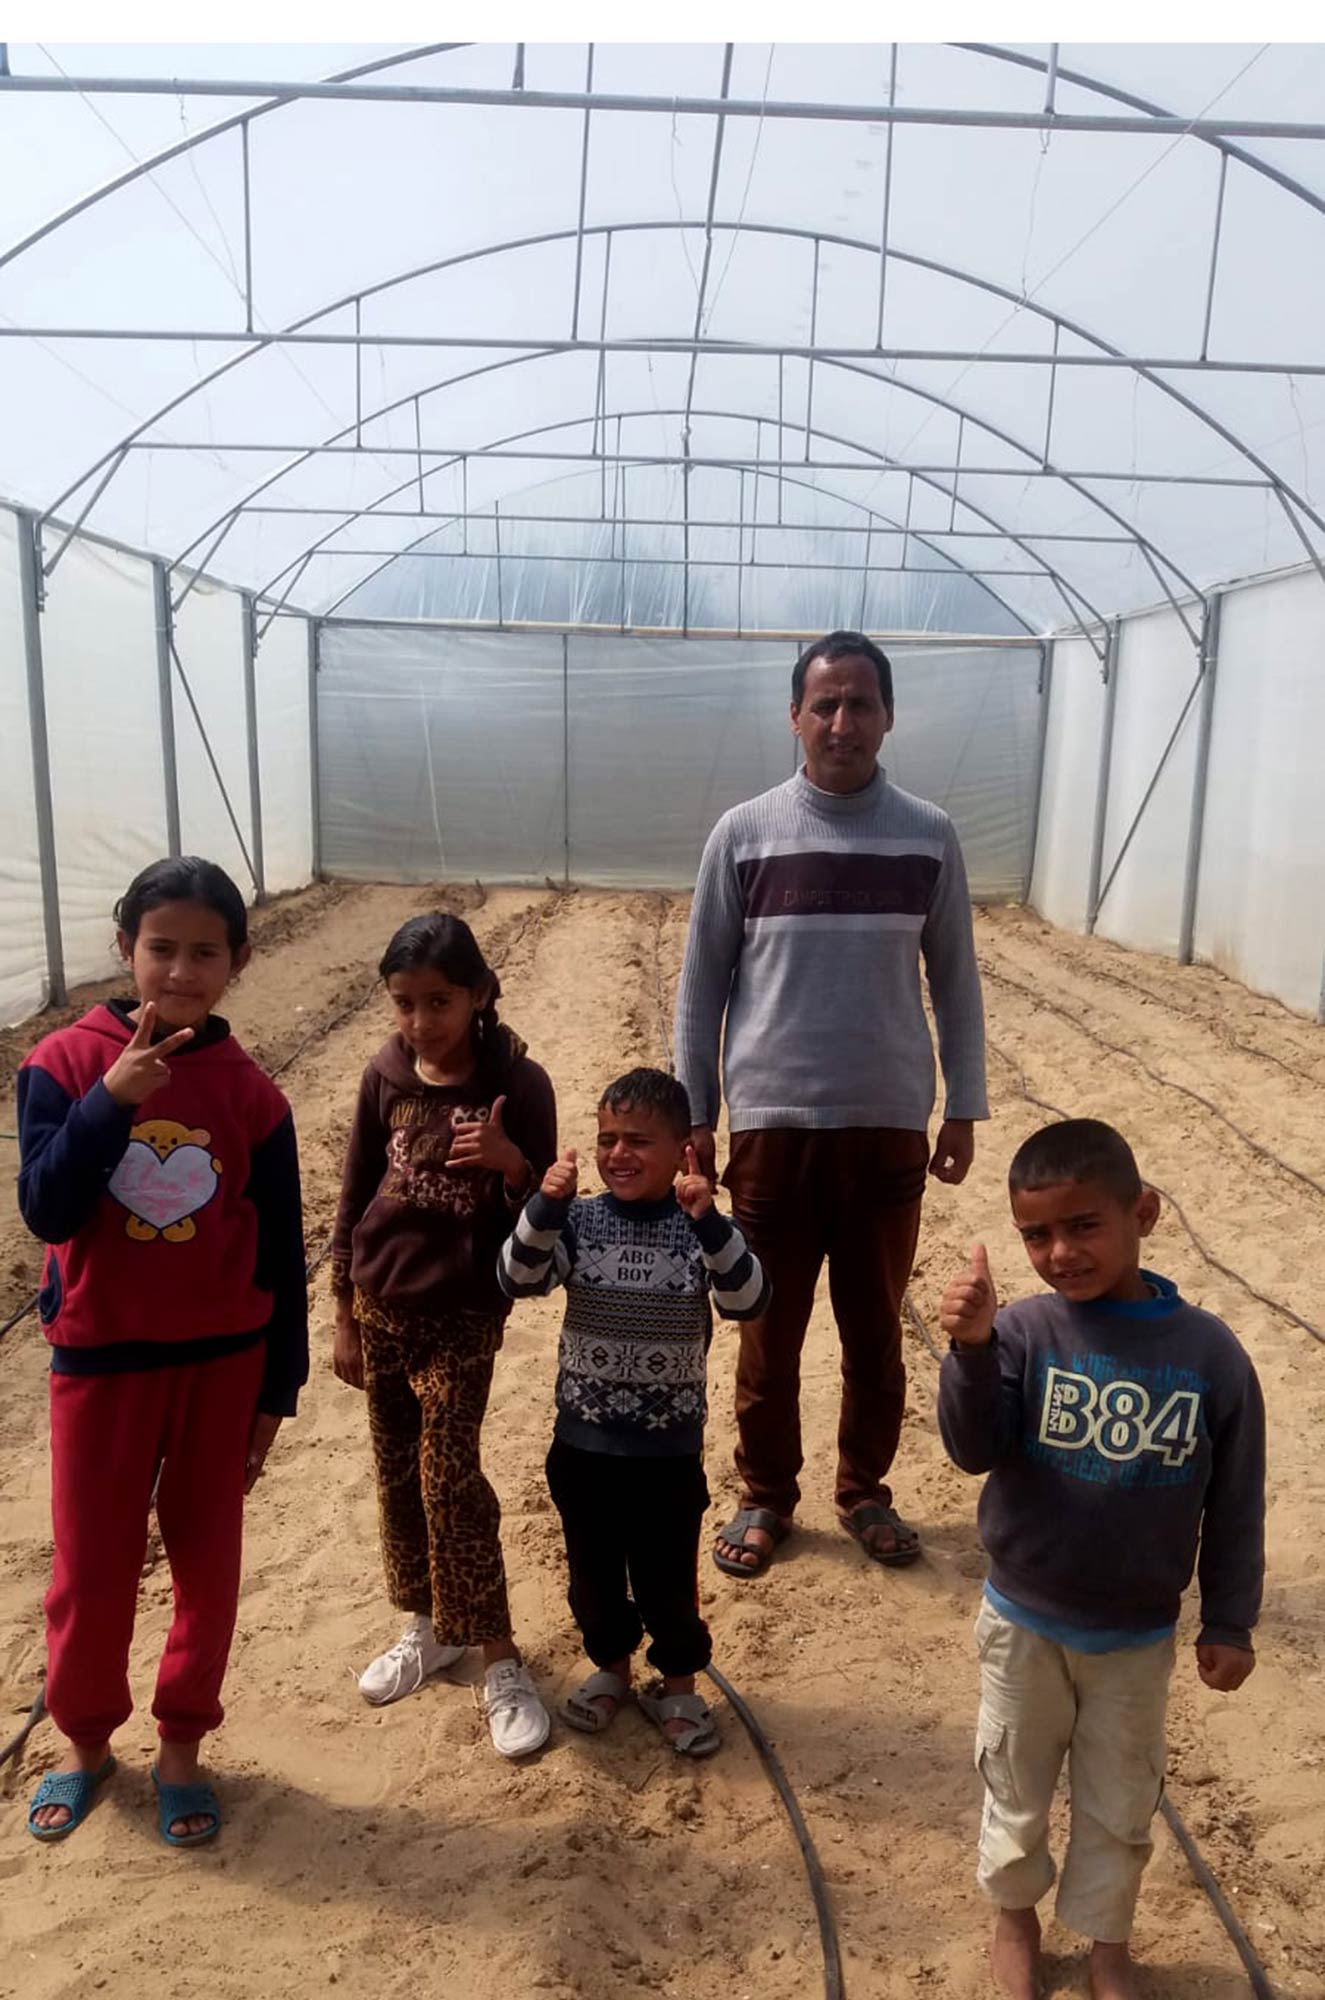 The Abu Sanima family enjoying their new greenhouse in Rafah, Gaza.